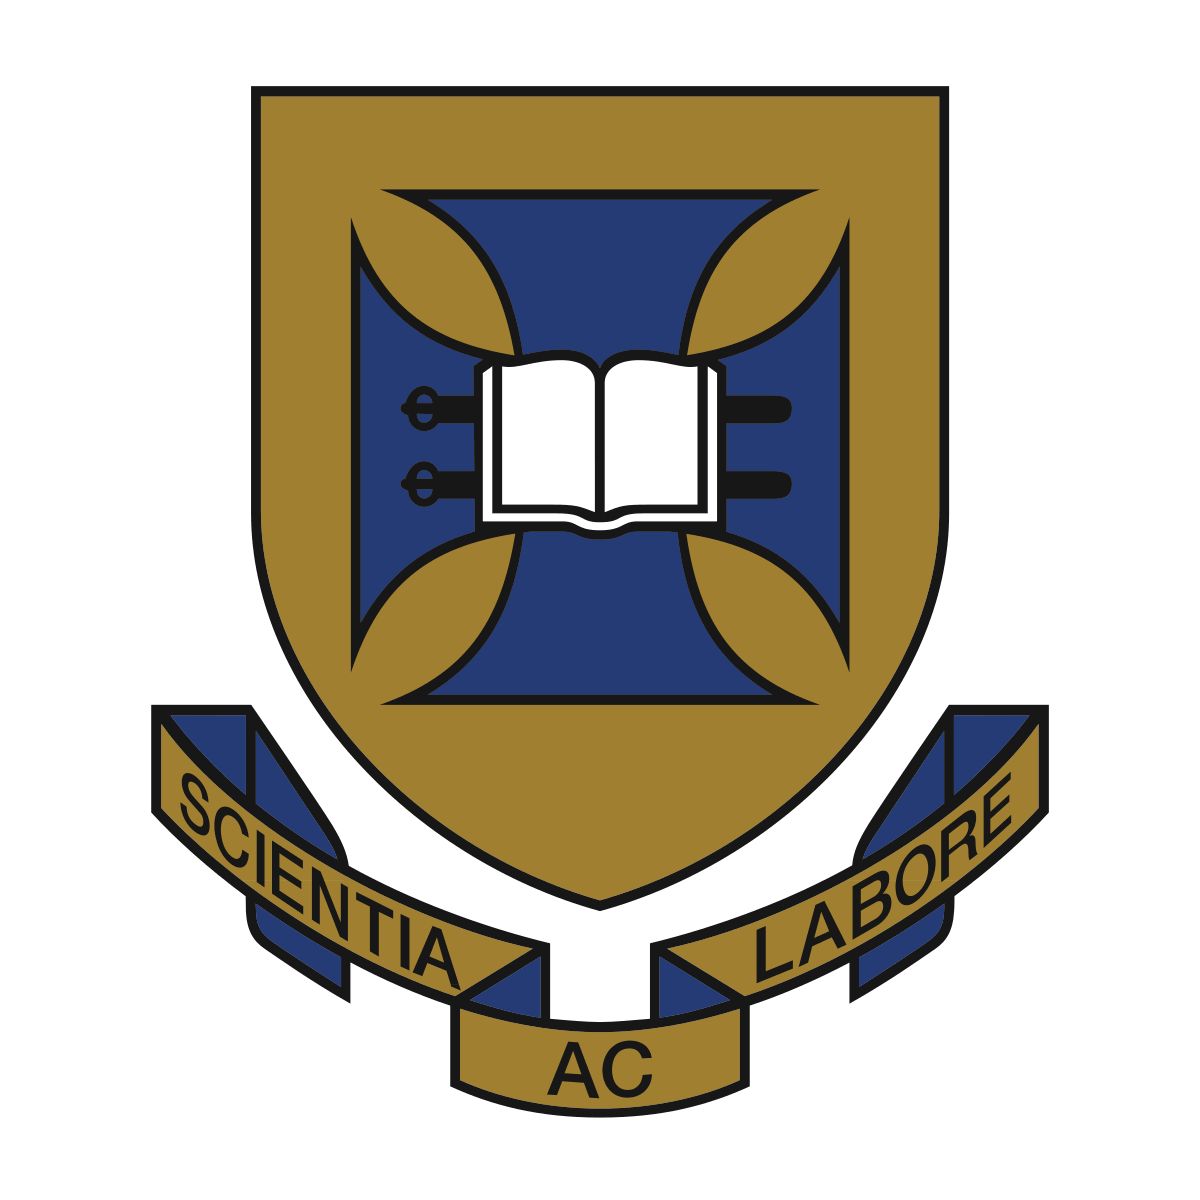 University of Queensland (UQ) Course/Program Name